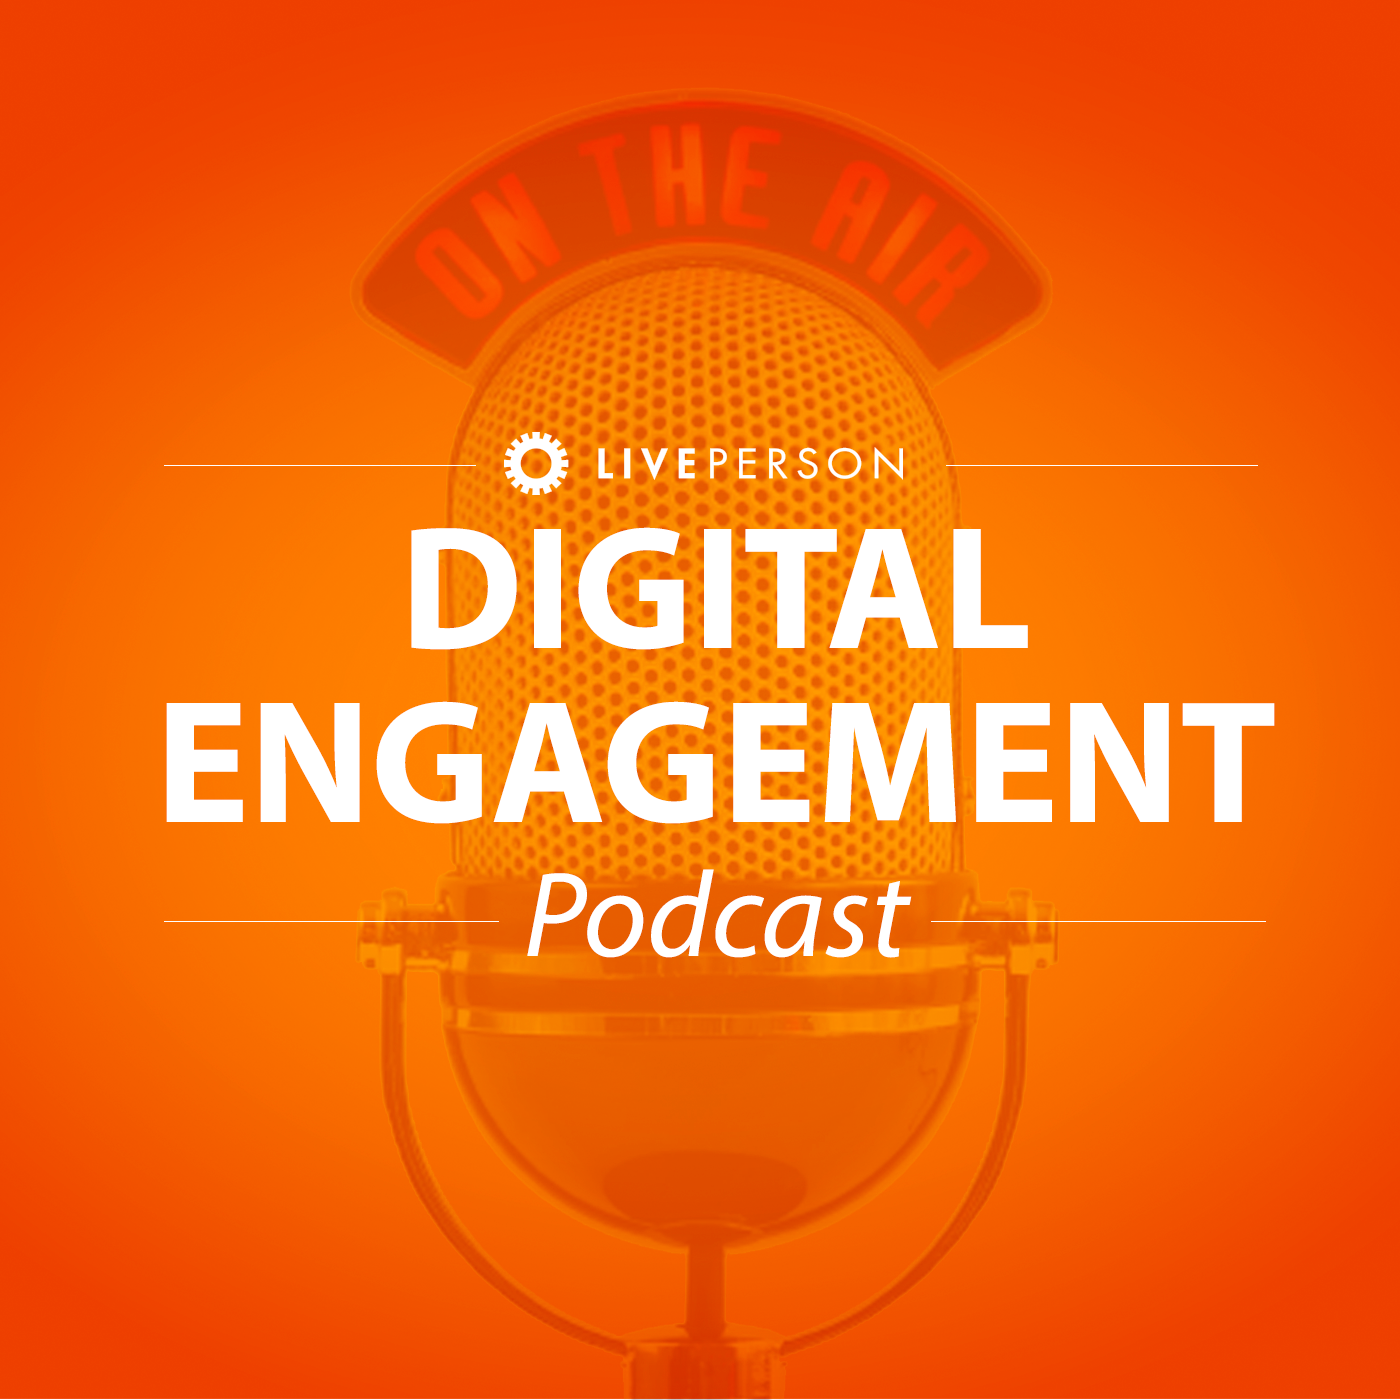 Digital Engagement